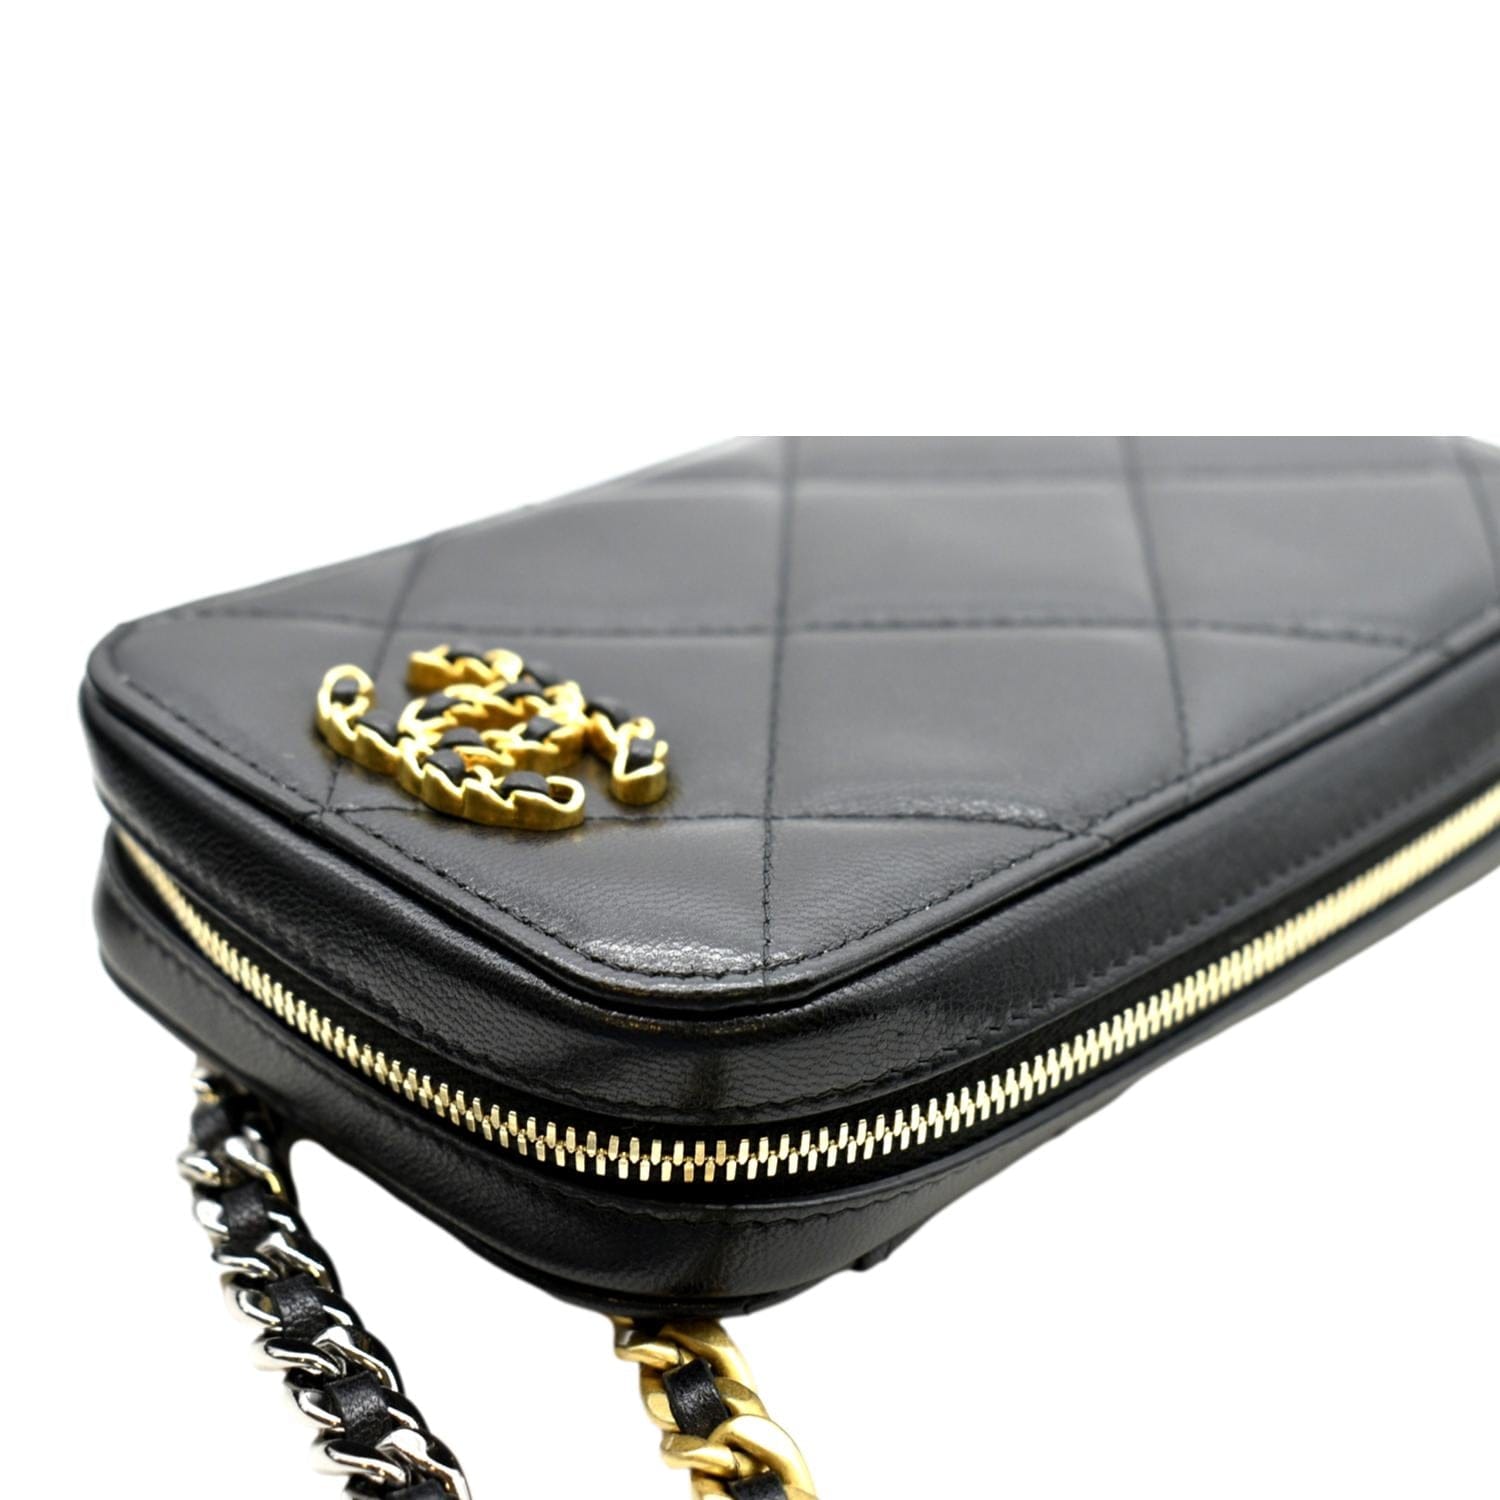 chanel 19 zipped coin purse black